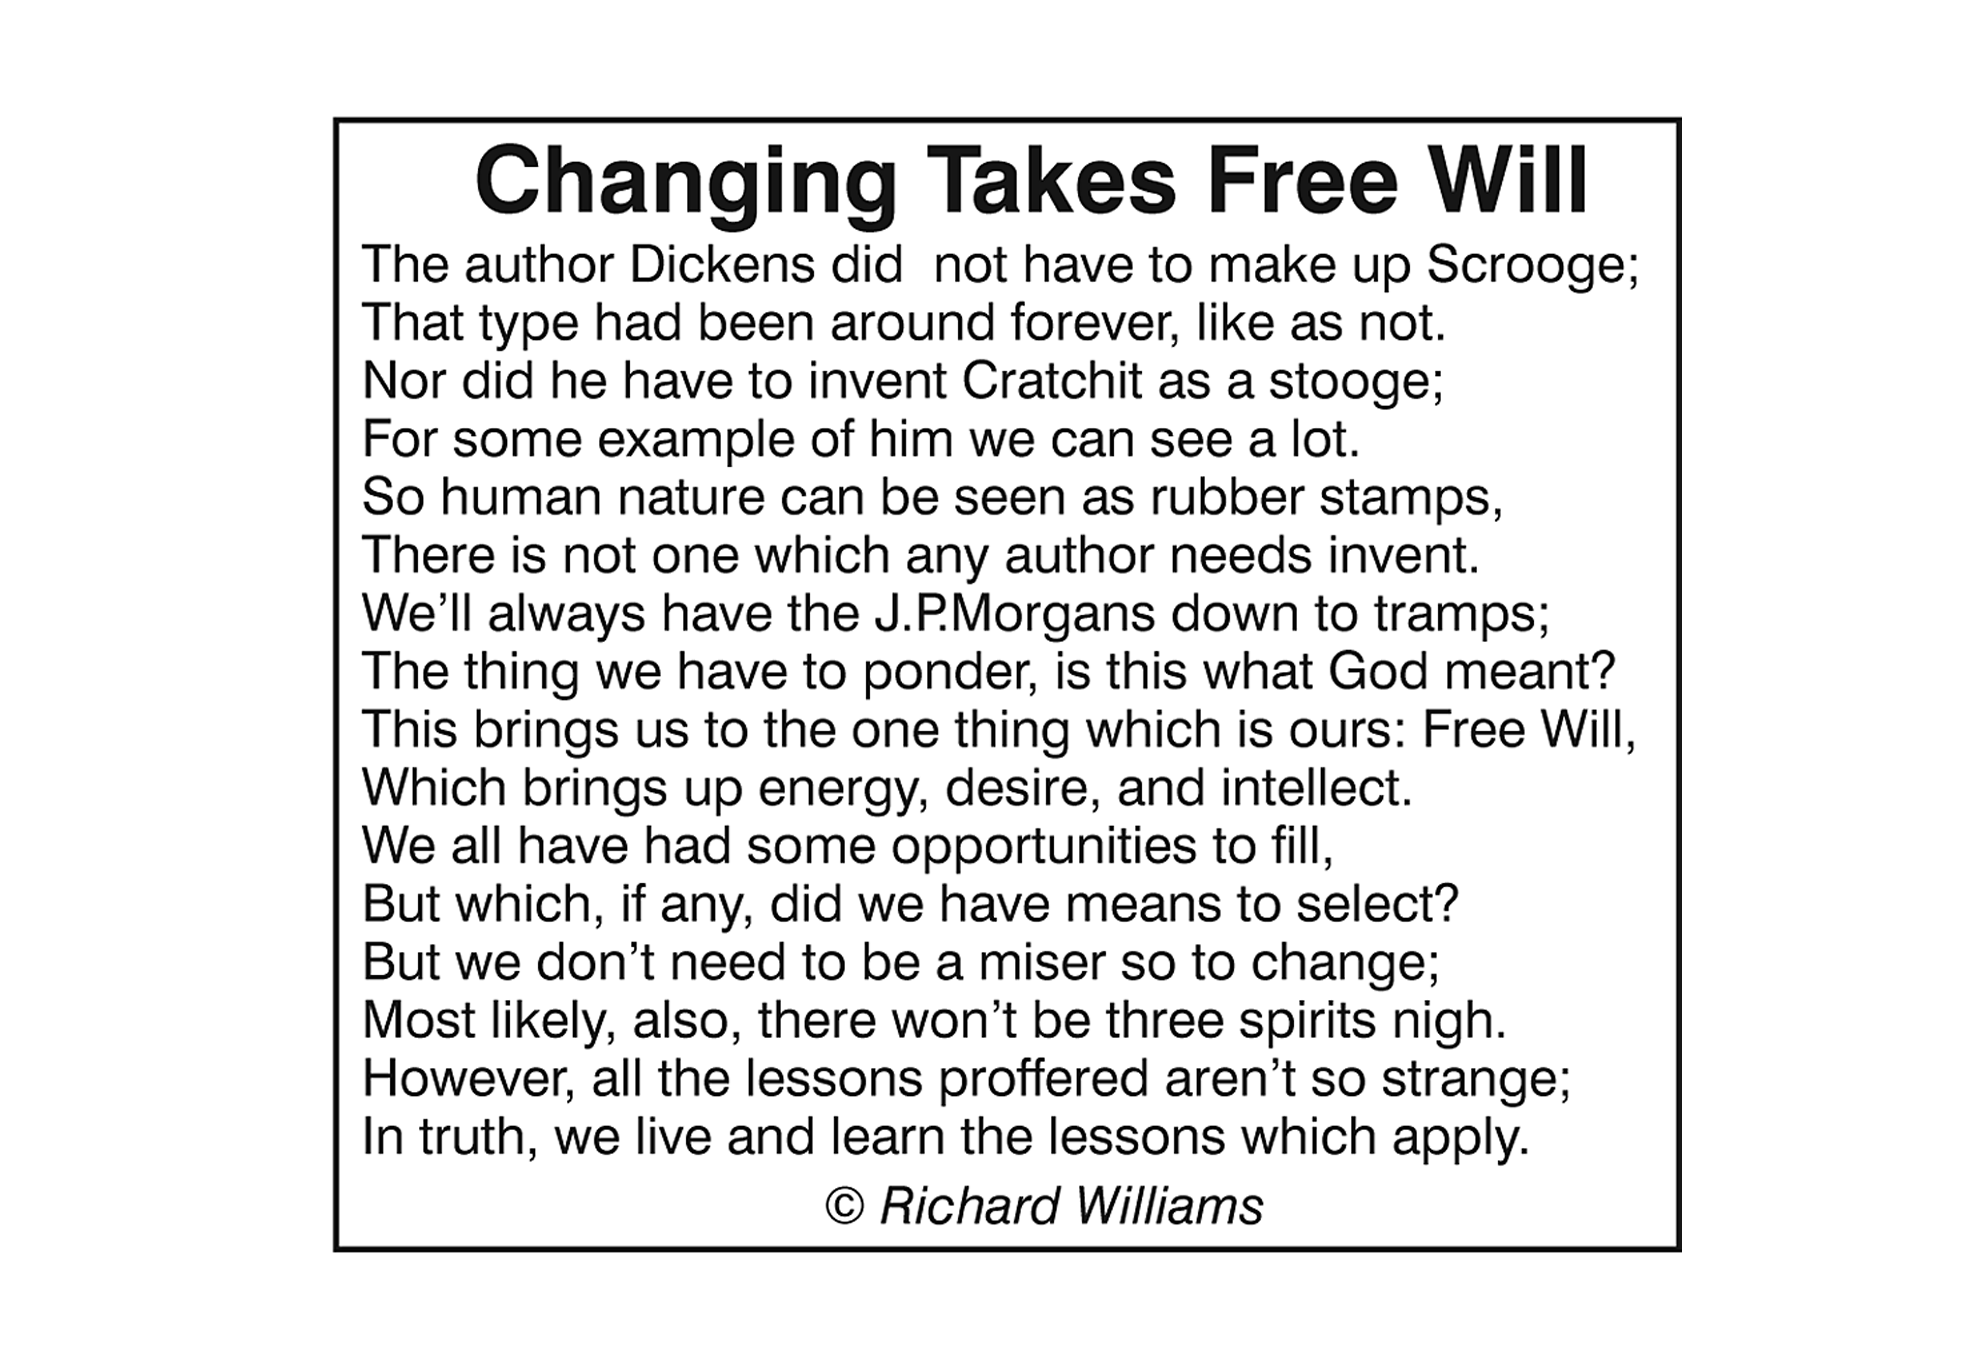 Richard Williams Poem: Changing Takes Free Will 12-13-18